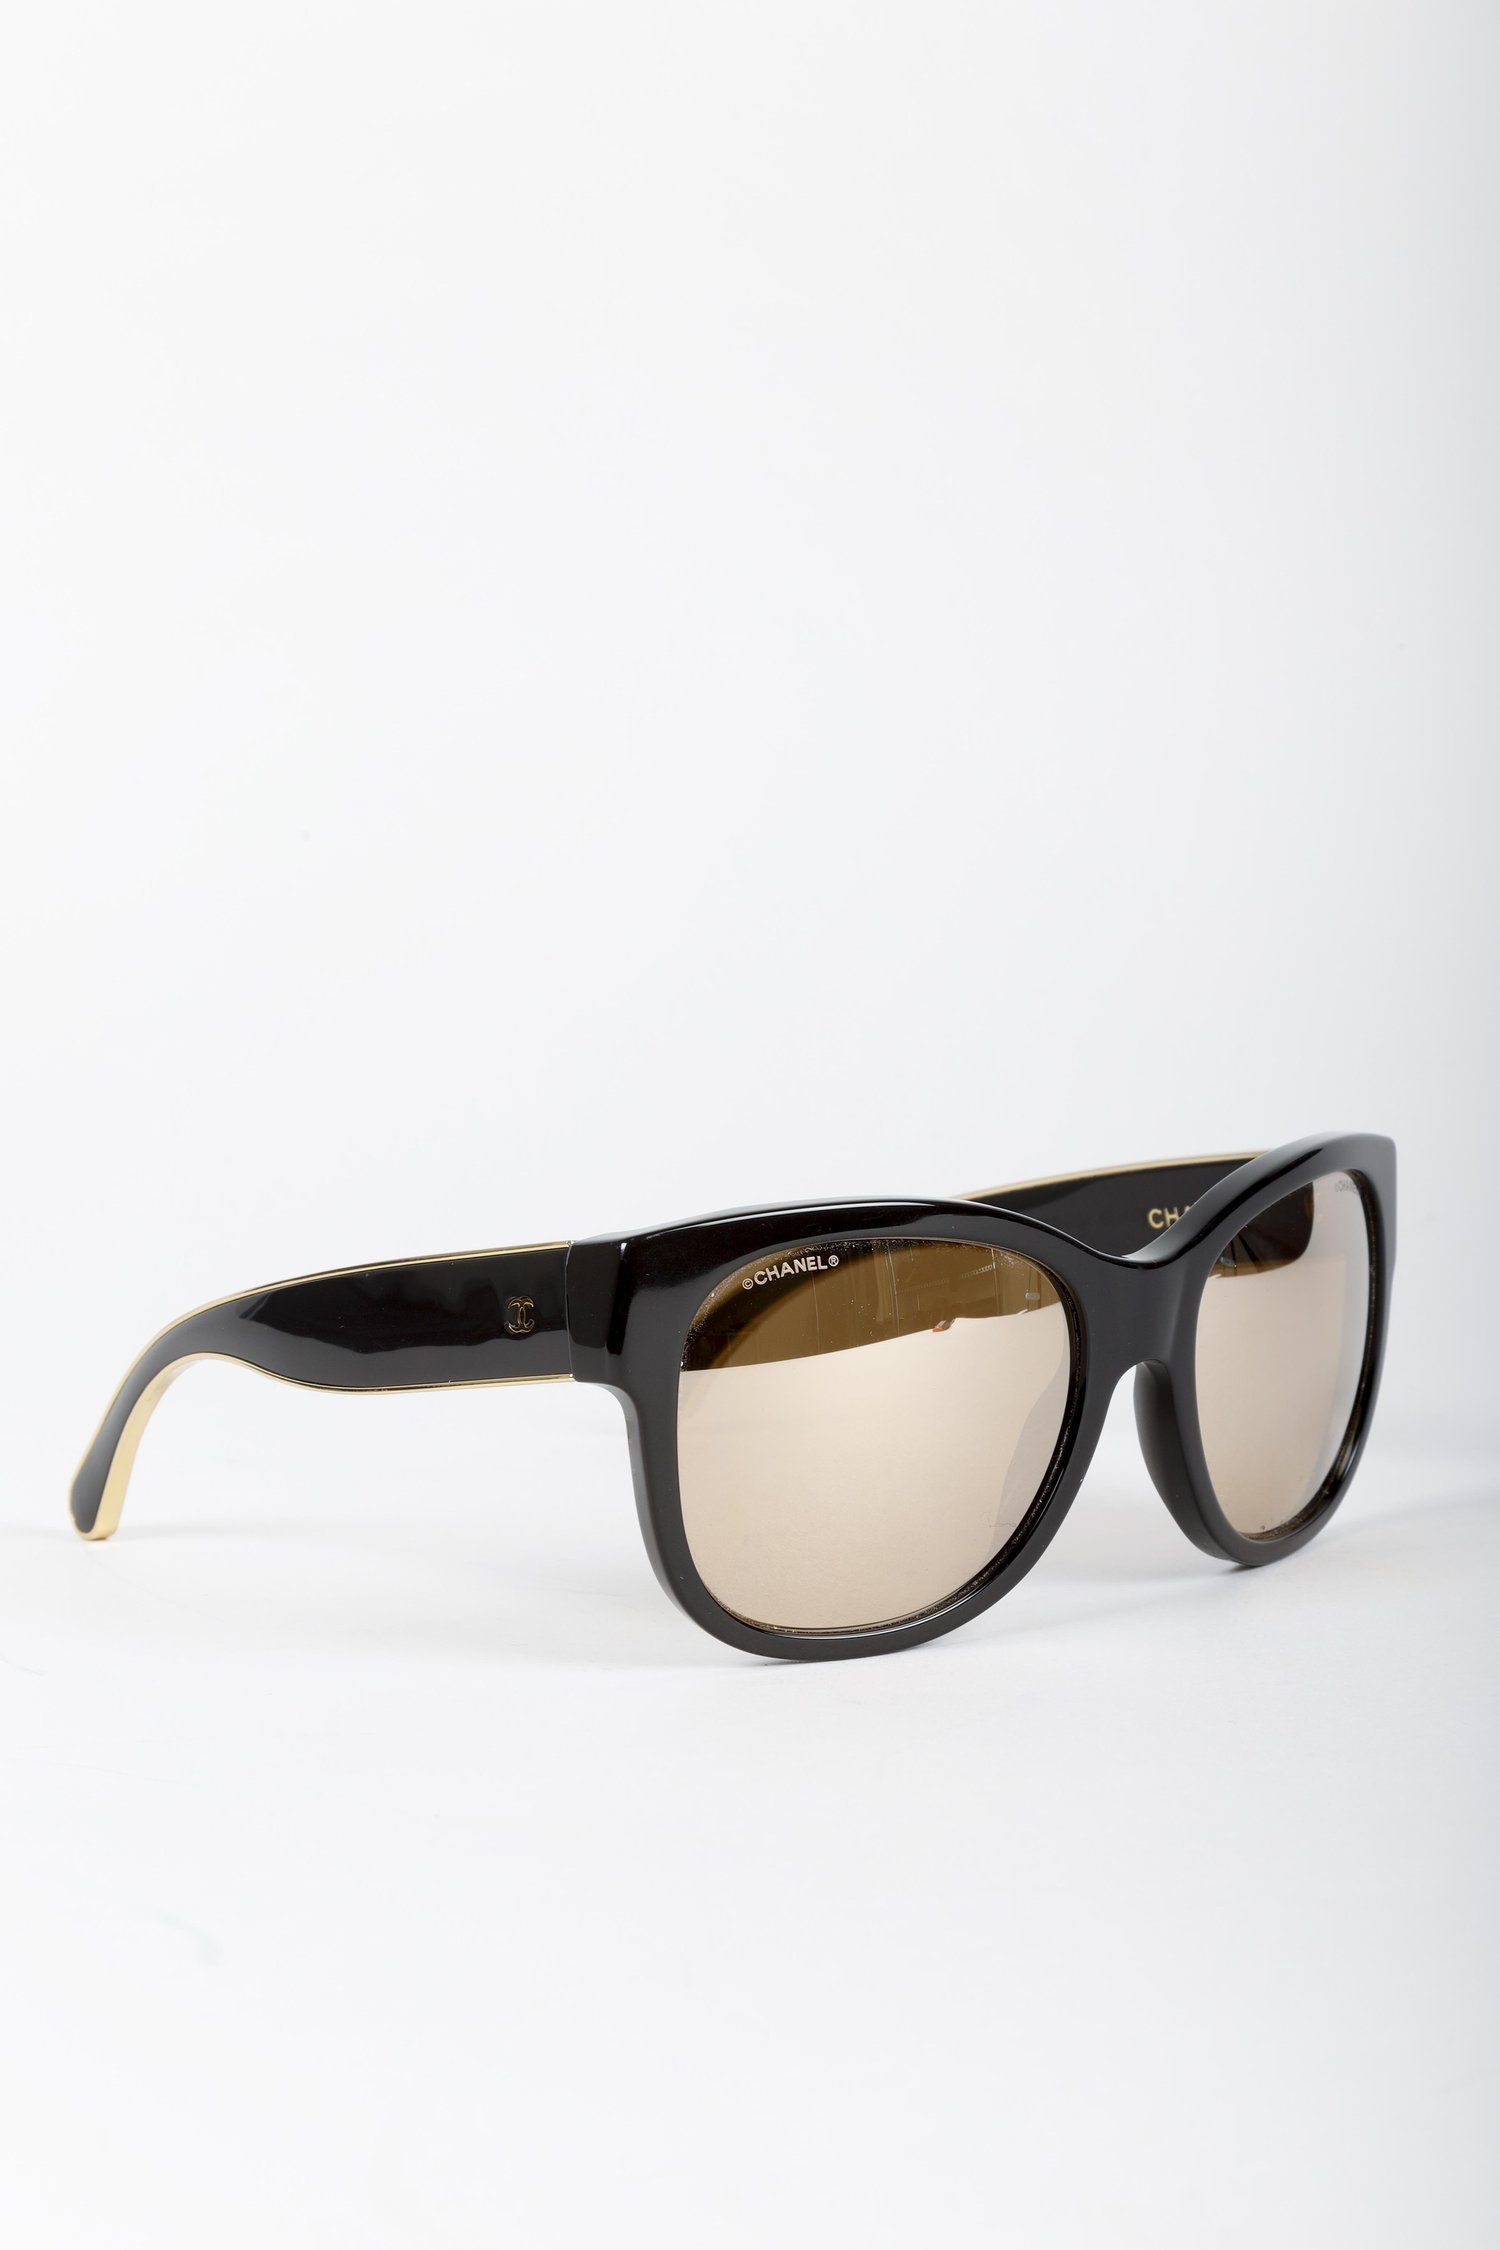 Chanel Designer Sunglasses 6016-501 in Black with Grey Lens - Speert  International